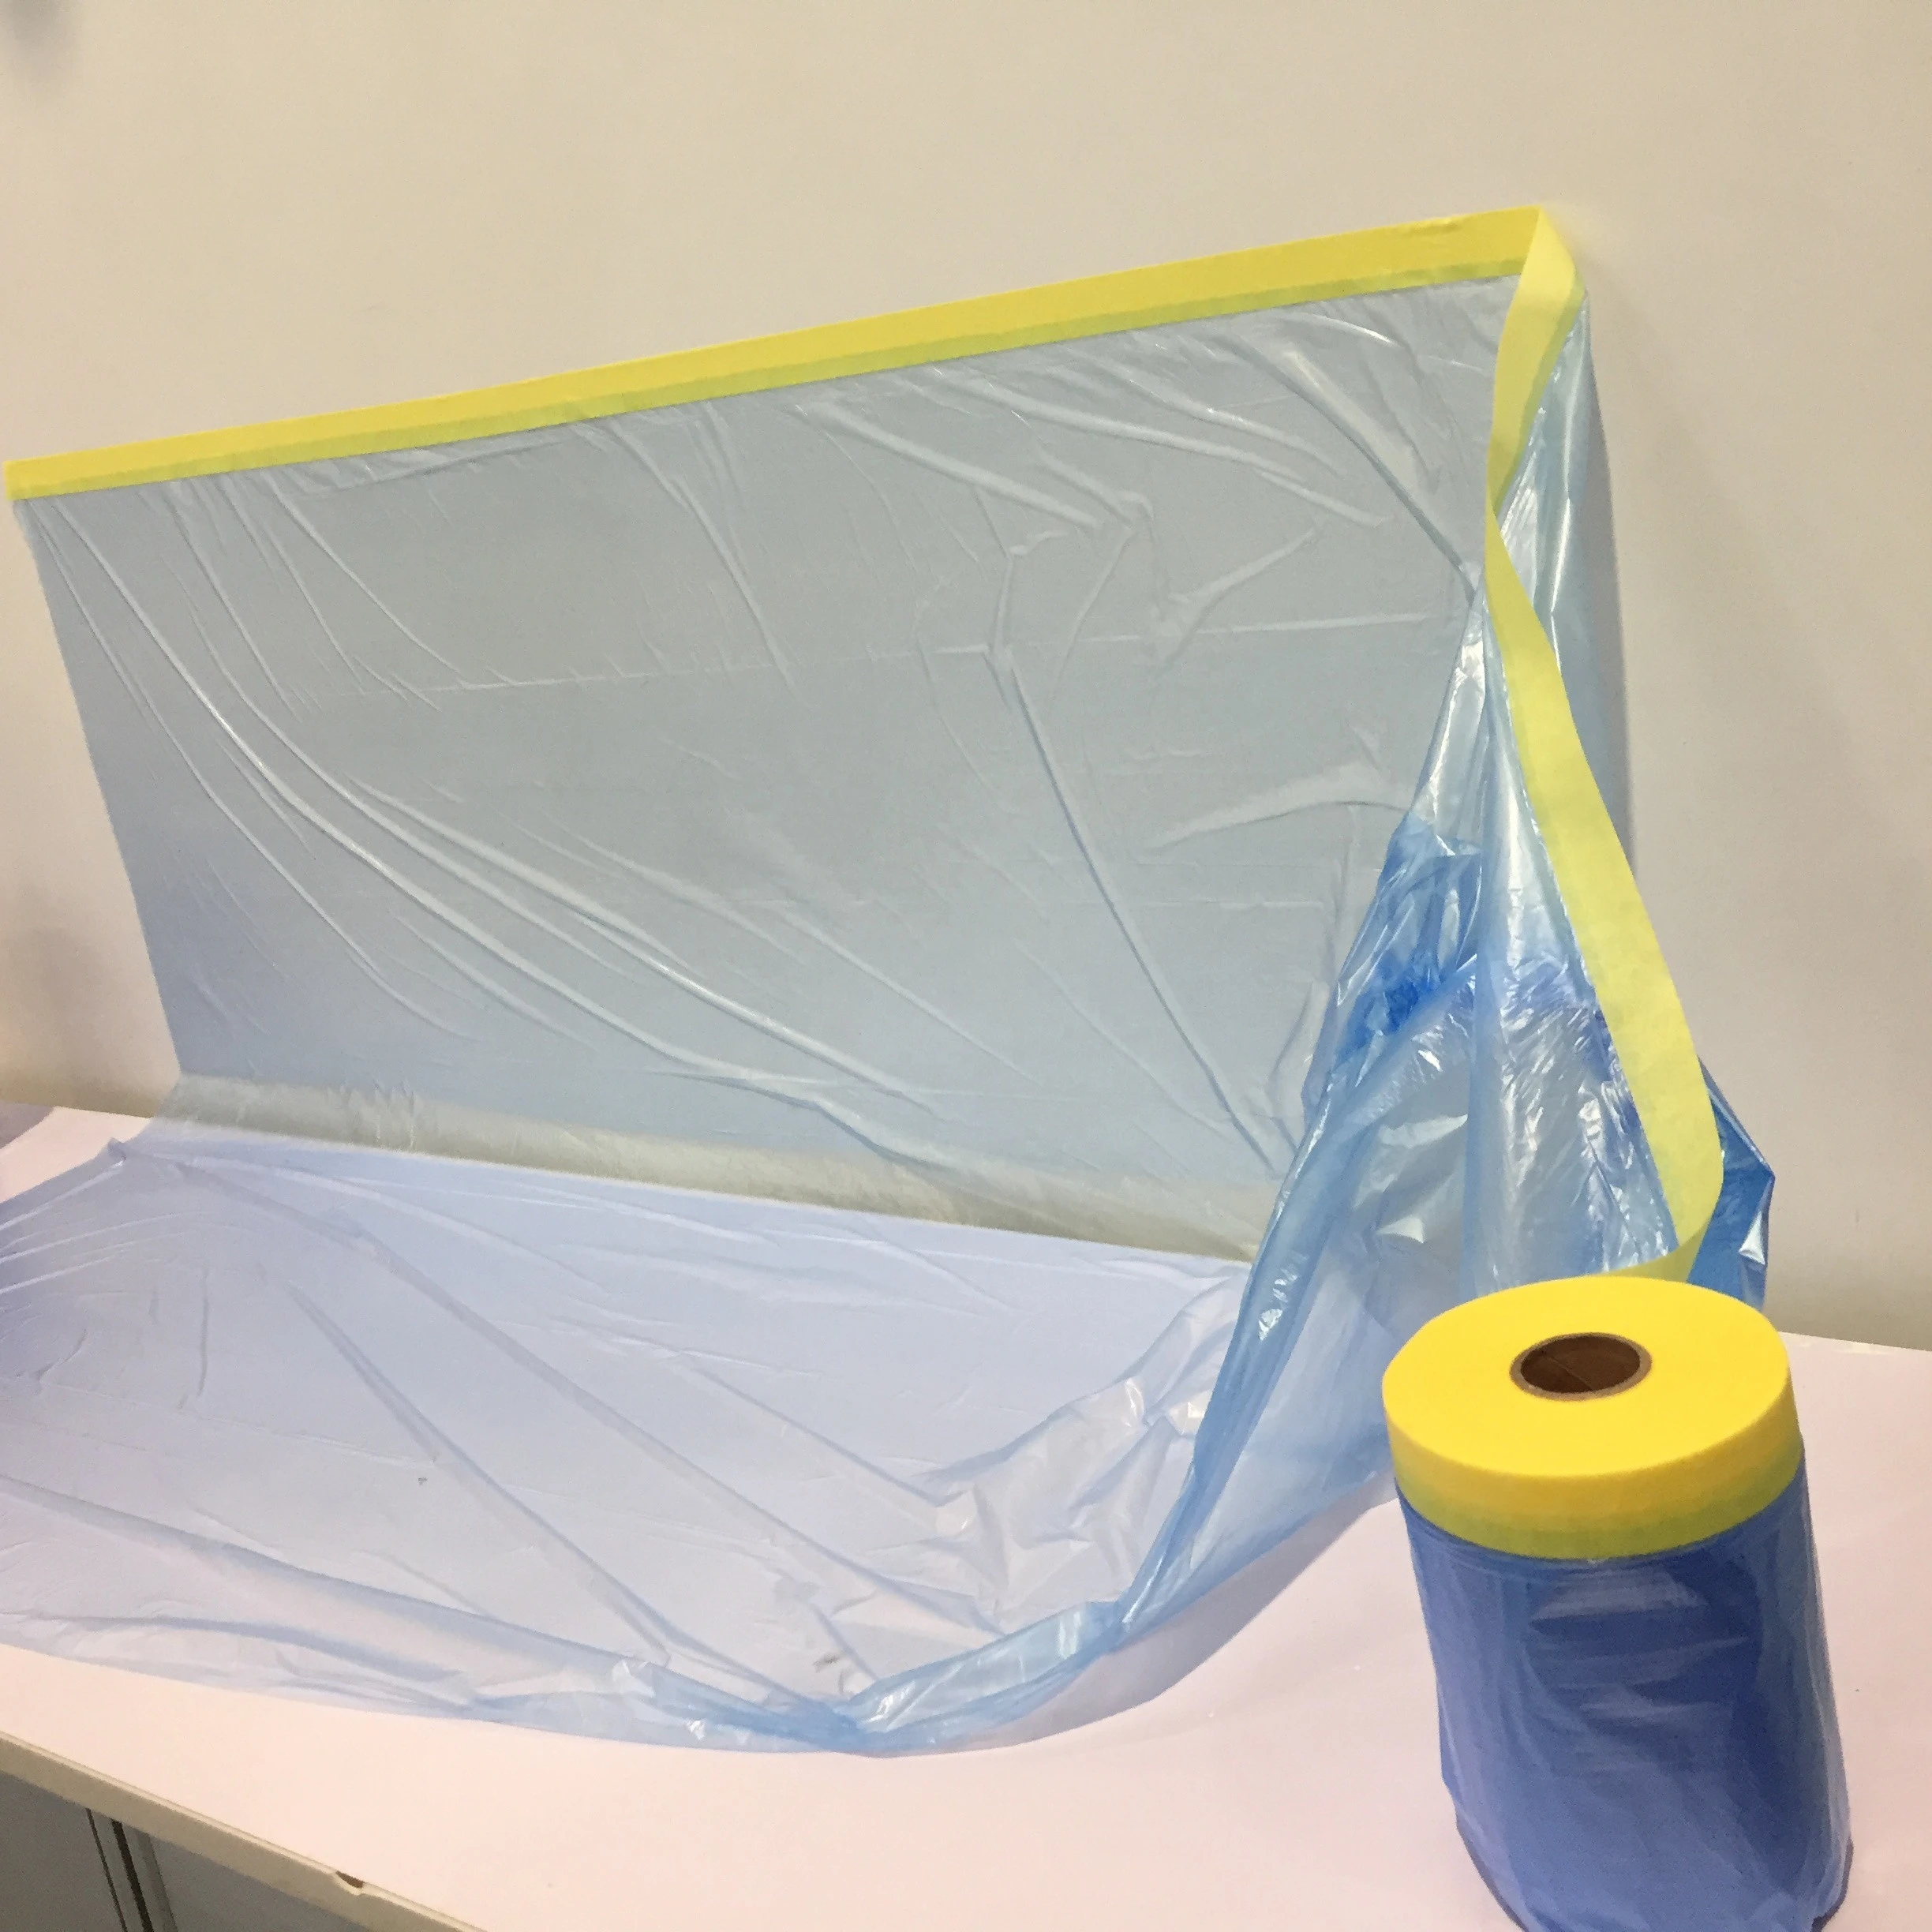 Clear White Painters Plastic Film Sheet, Masking Adhesive Tape